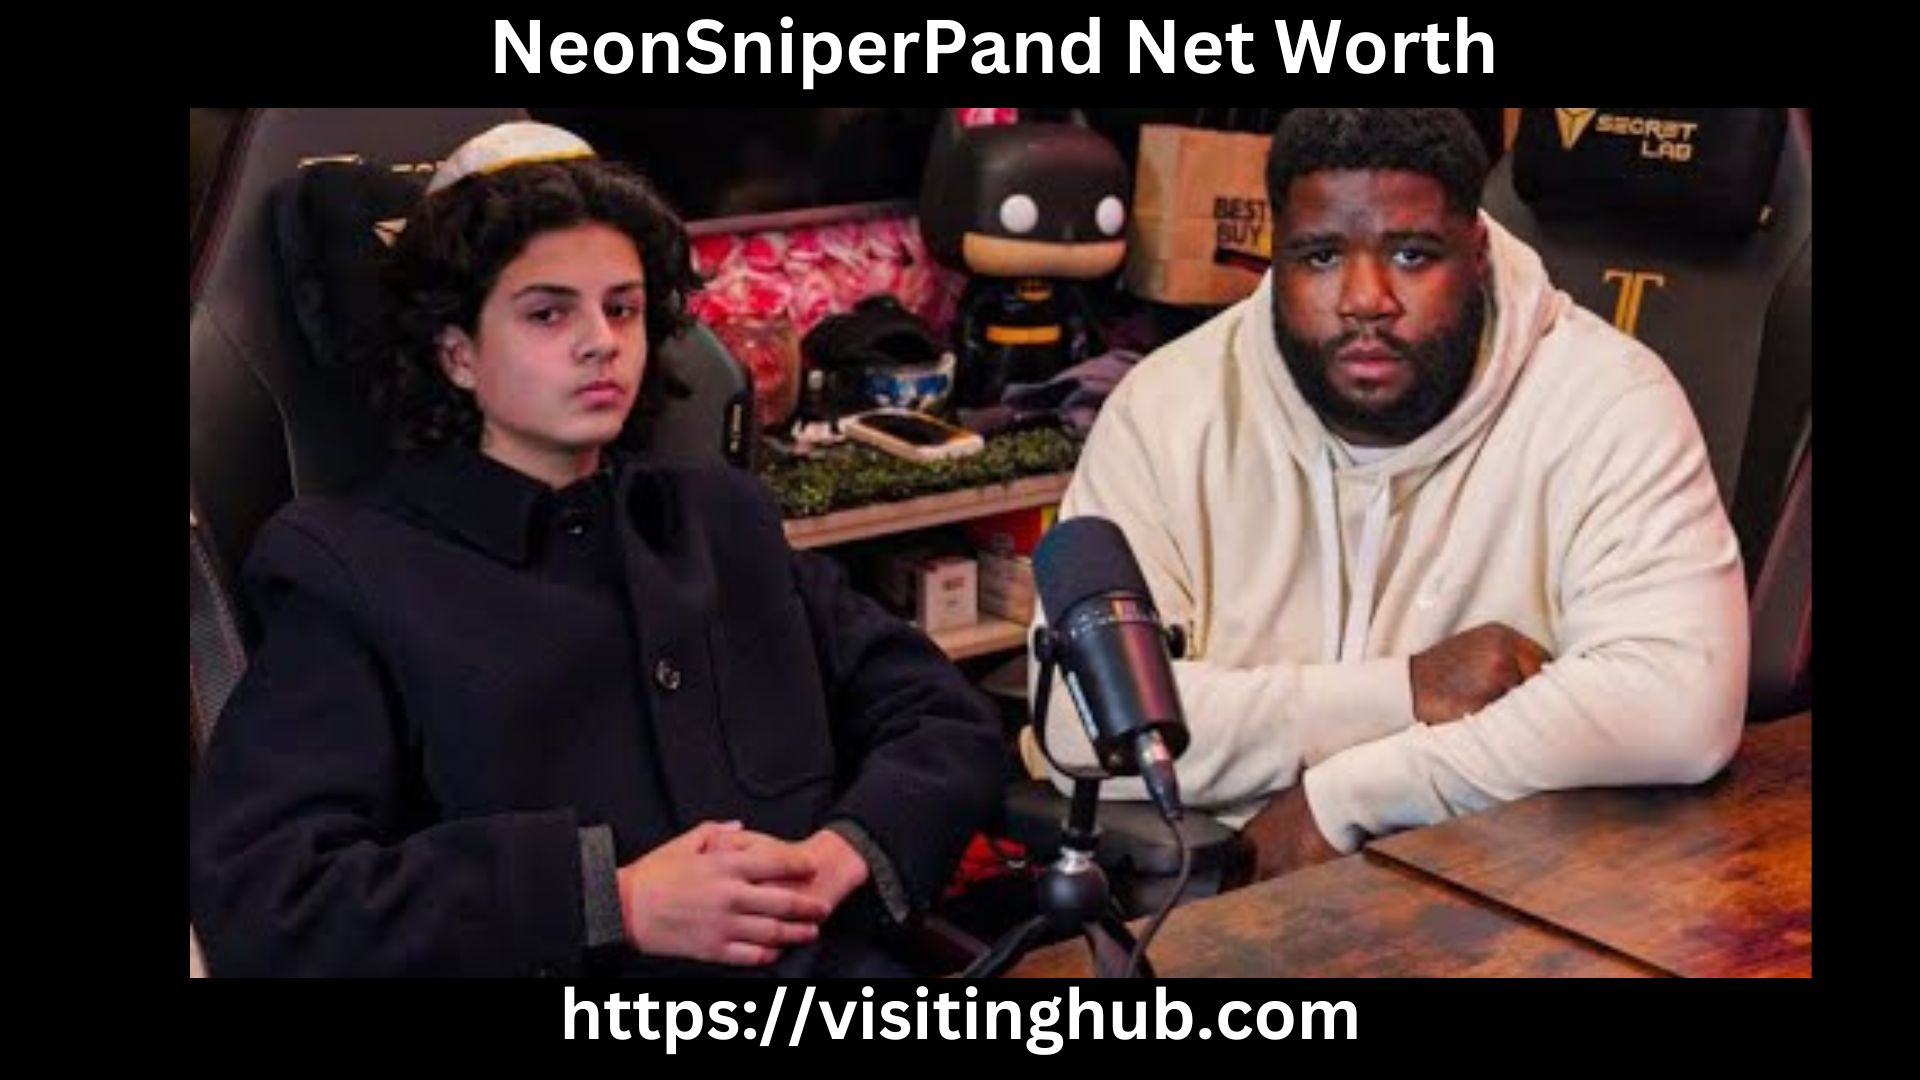 NeonSniperPand Net Worth